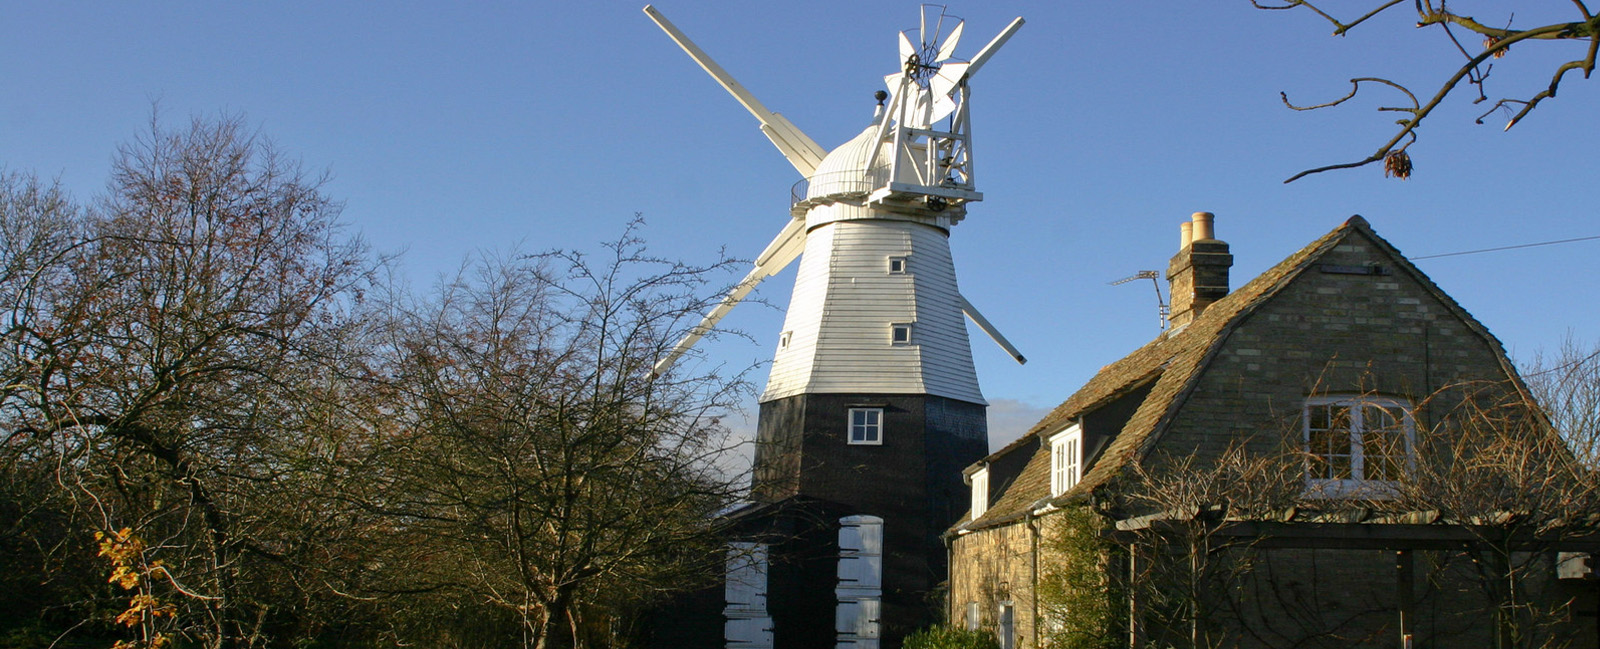 Impington Windmill